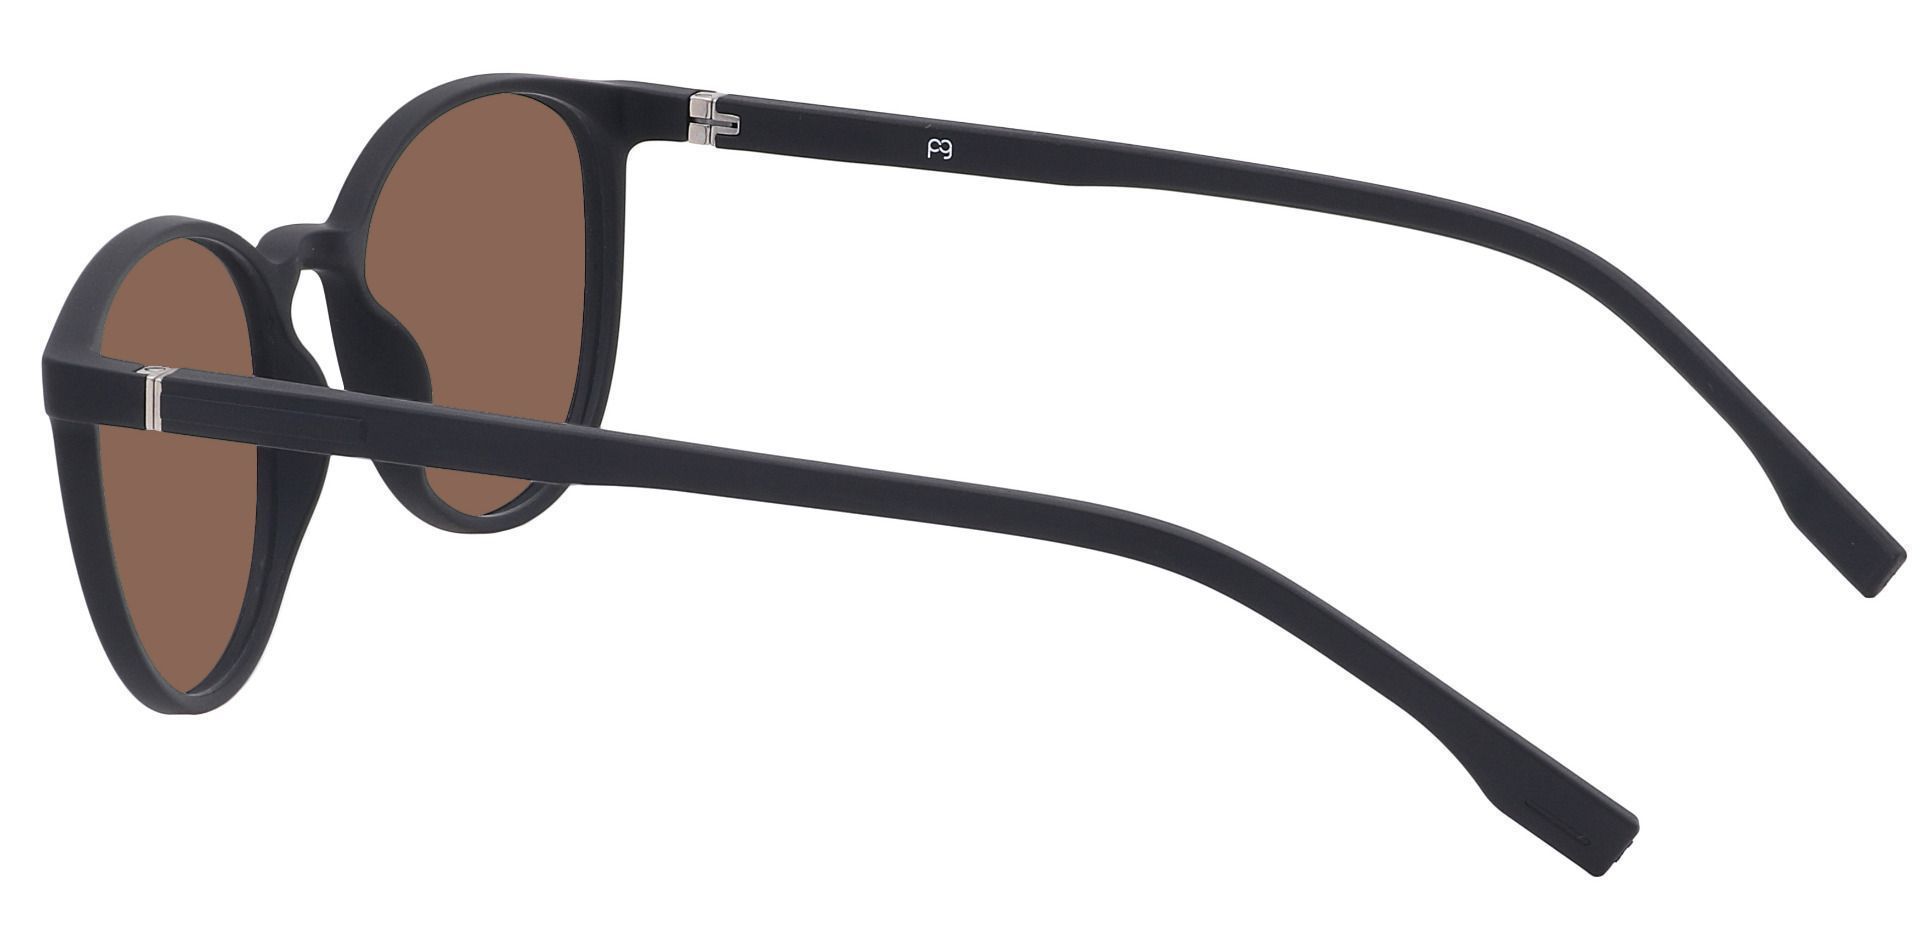 Bay Round Progressive Sunglasses - Black Frame With Brown Lenses